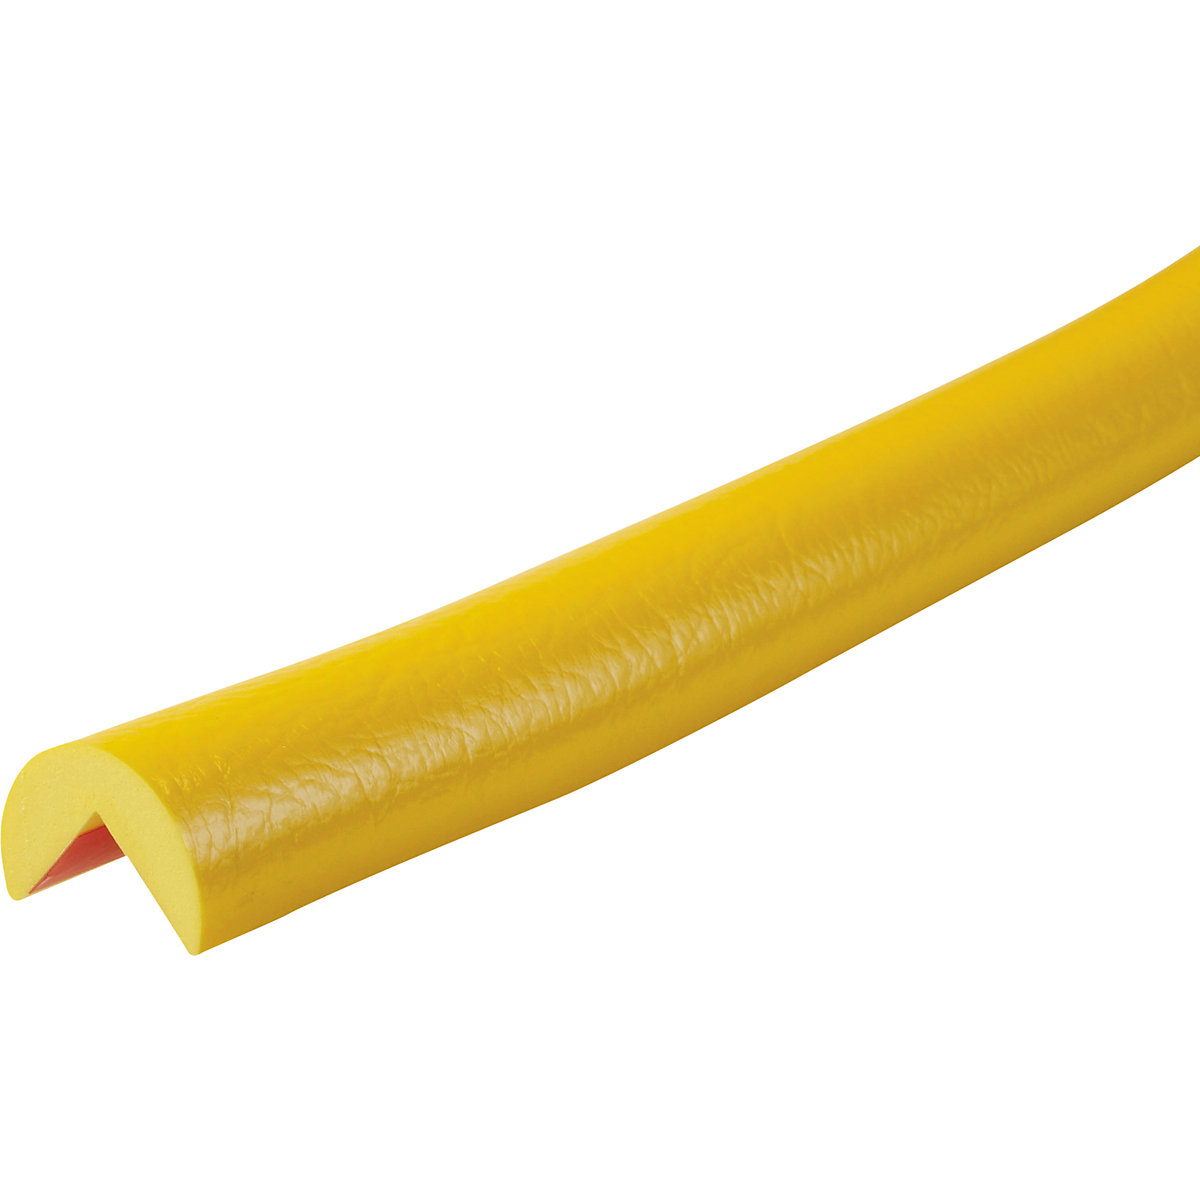 Knuffi® corner protection – SHG, type A, 1 m piece, yellow-15